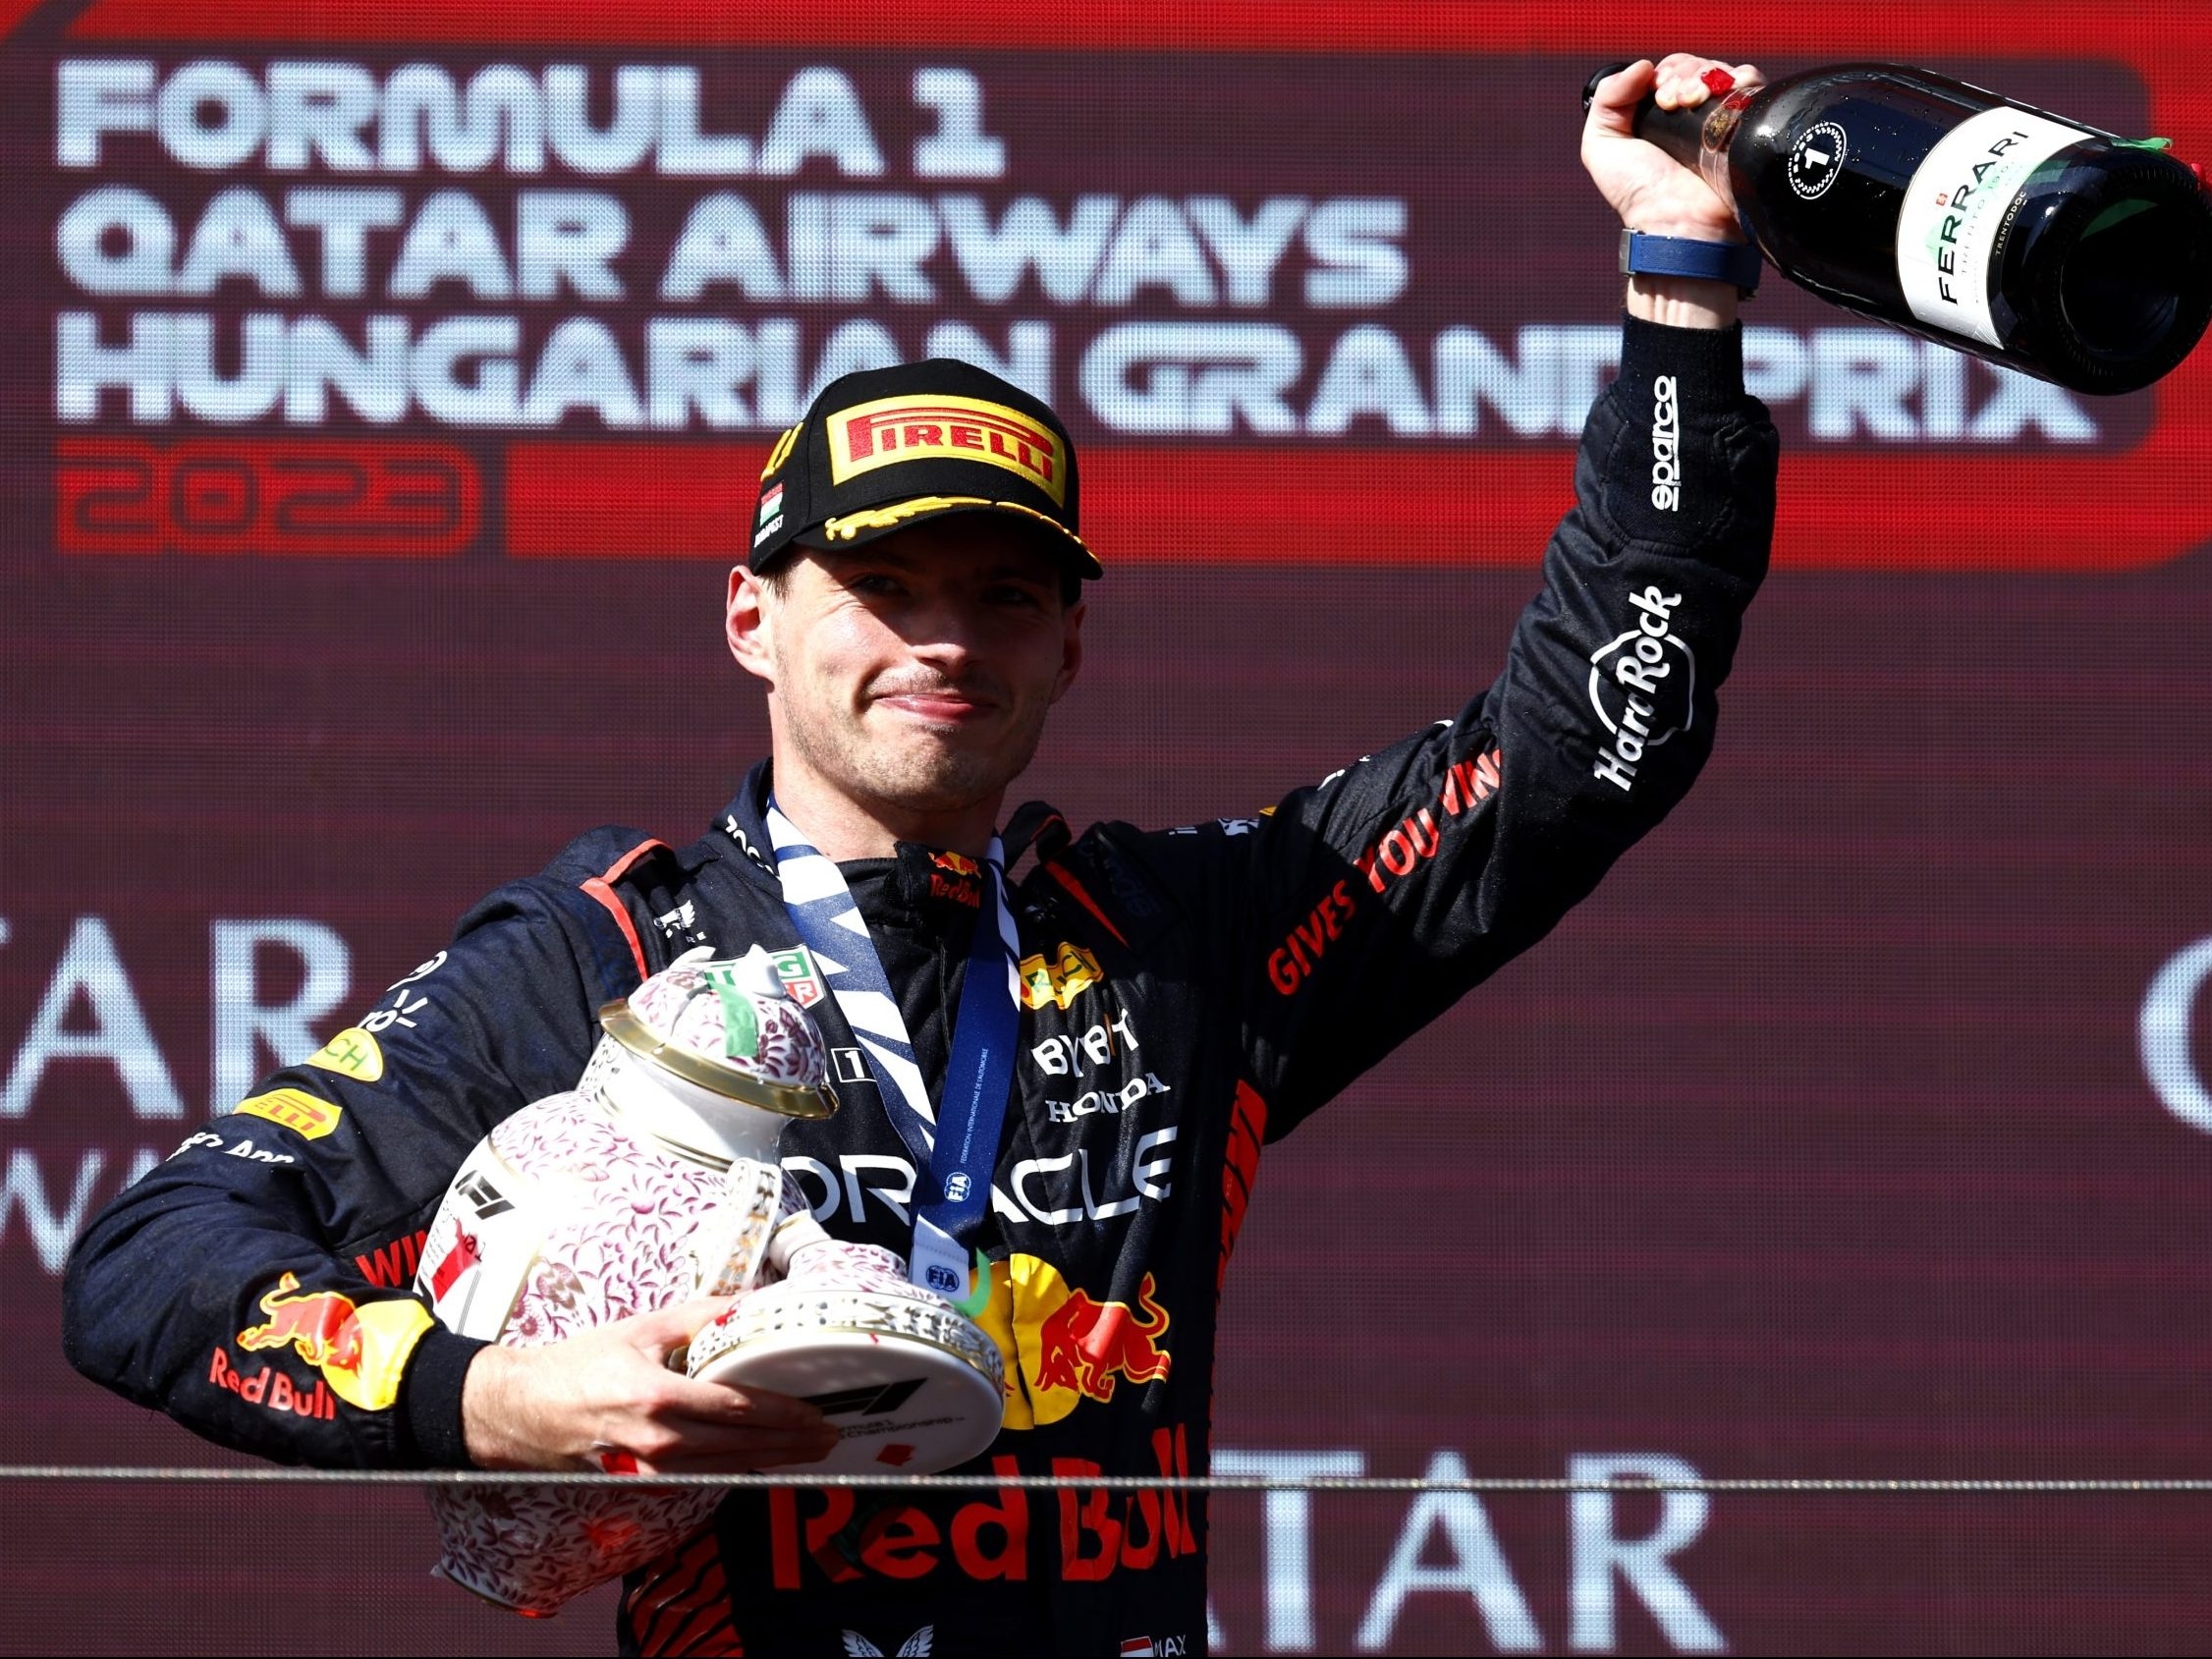 F1: Max Verstappen wins Canadian GP